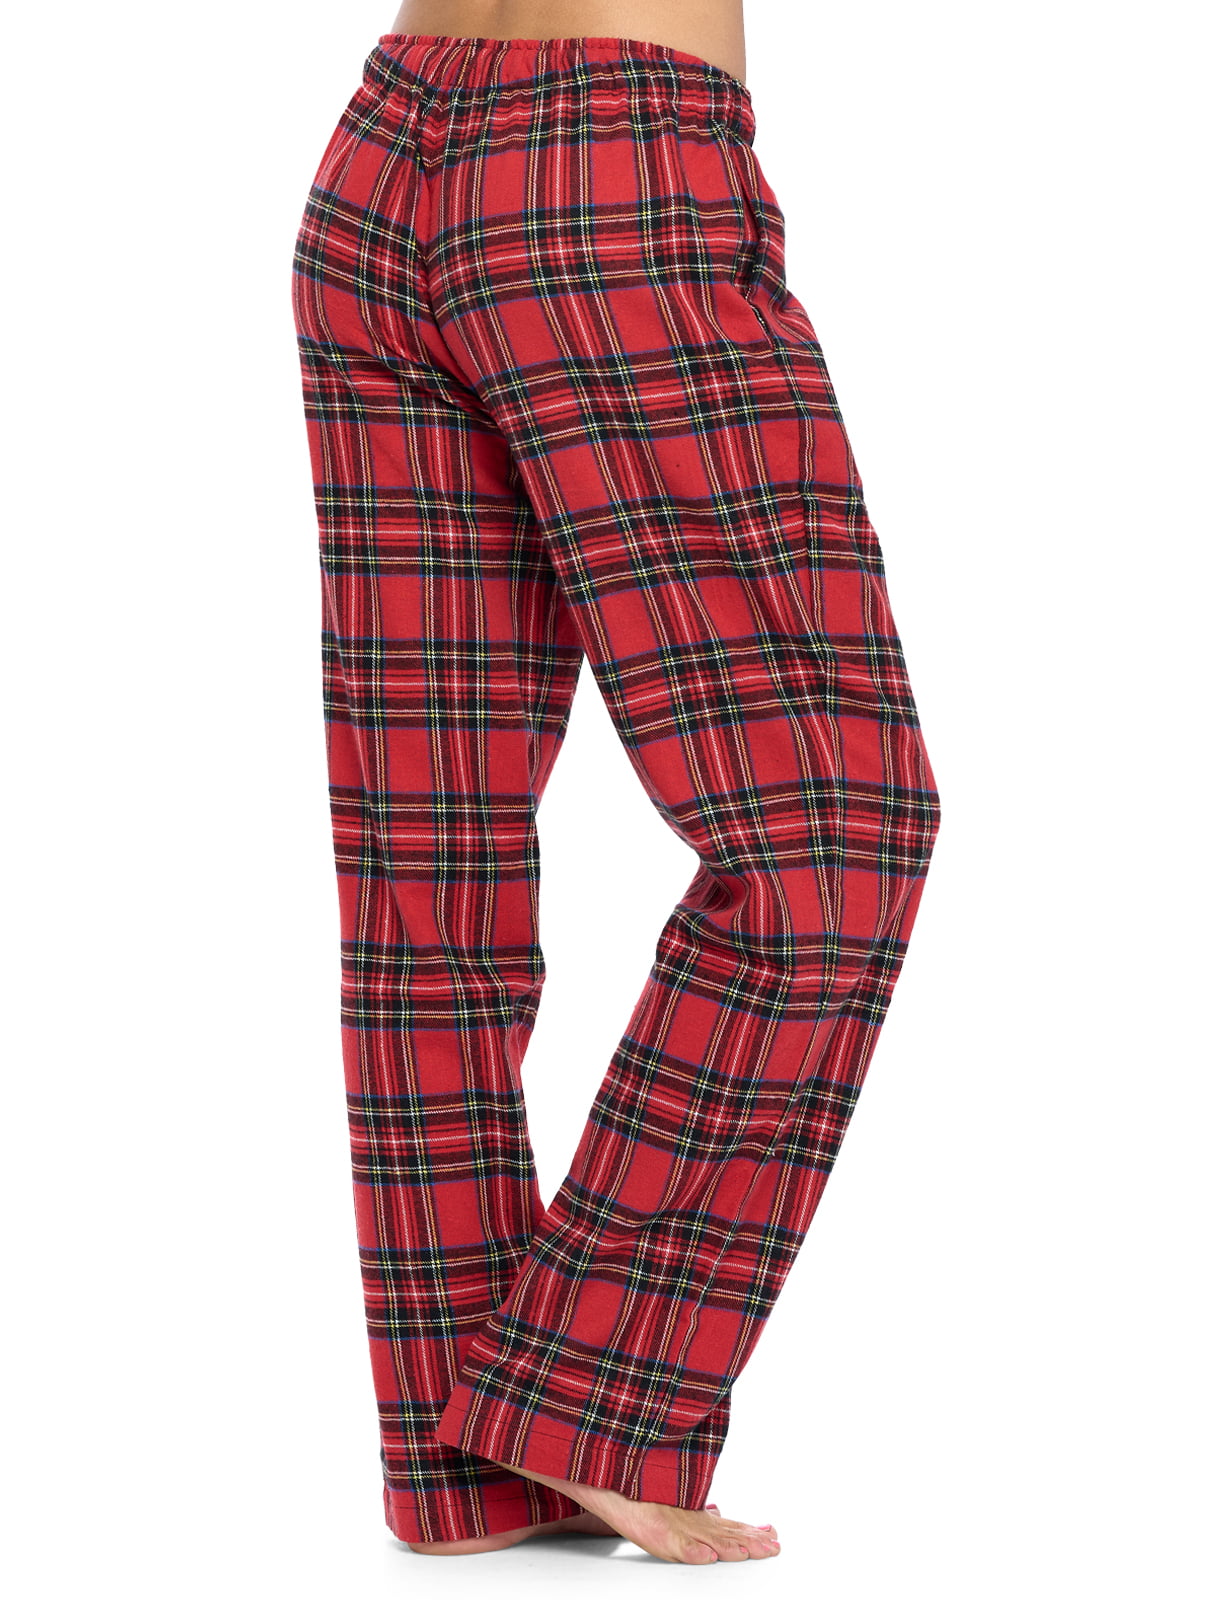 REDHOTYPE Pure Cotton Pajama Pants Women's Long Pants Comfortable